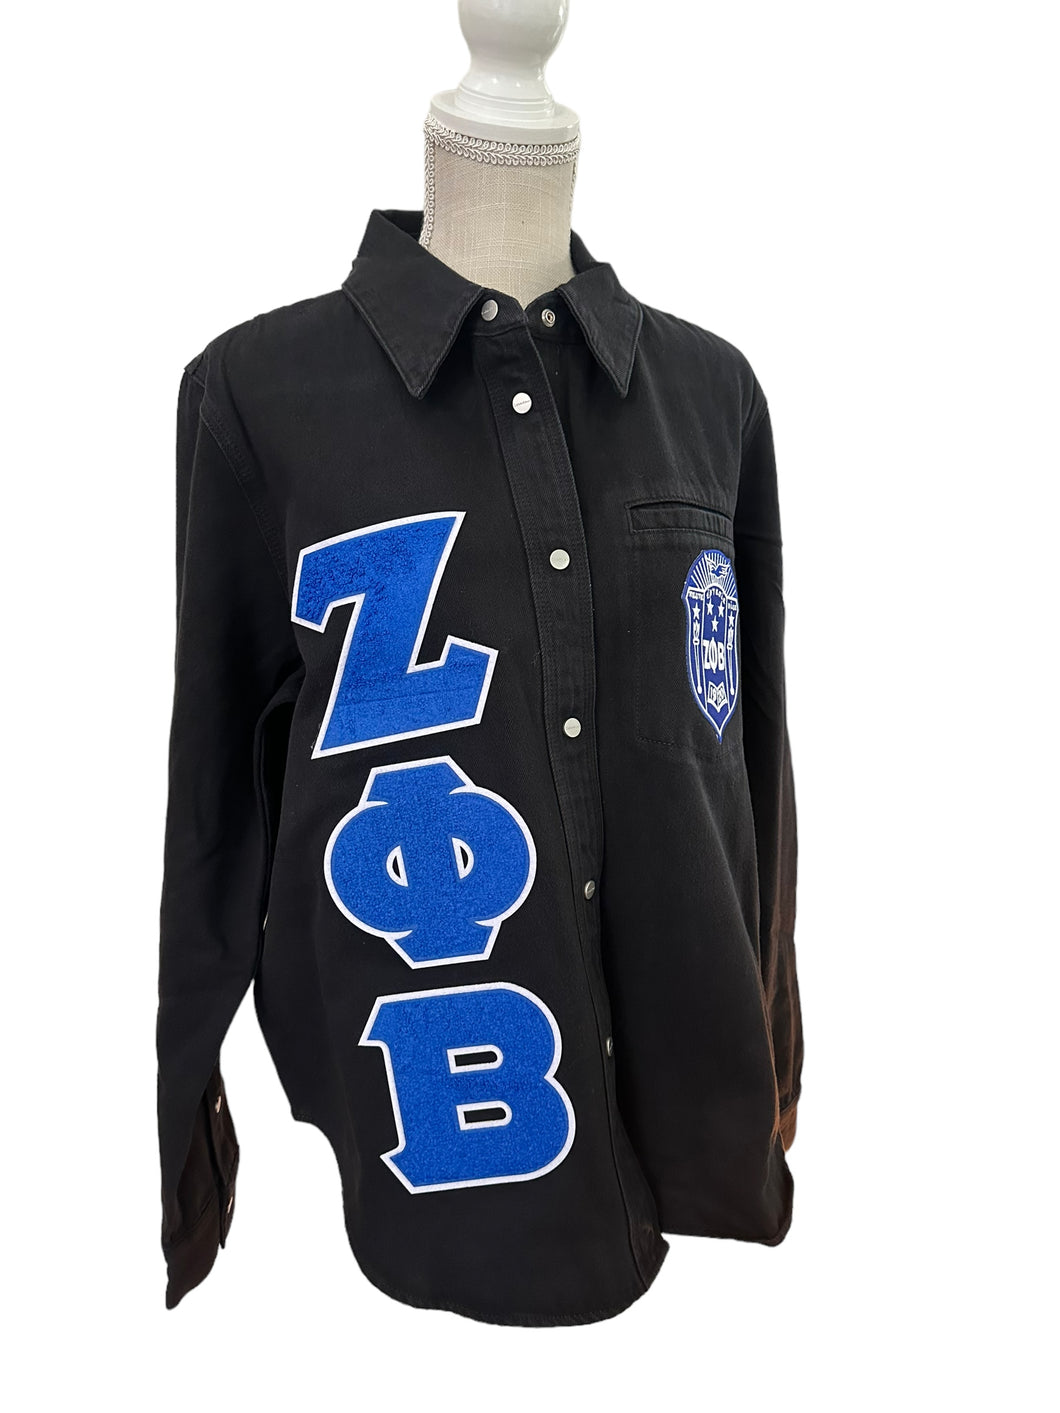 Zeta shirt/jacket black denim